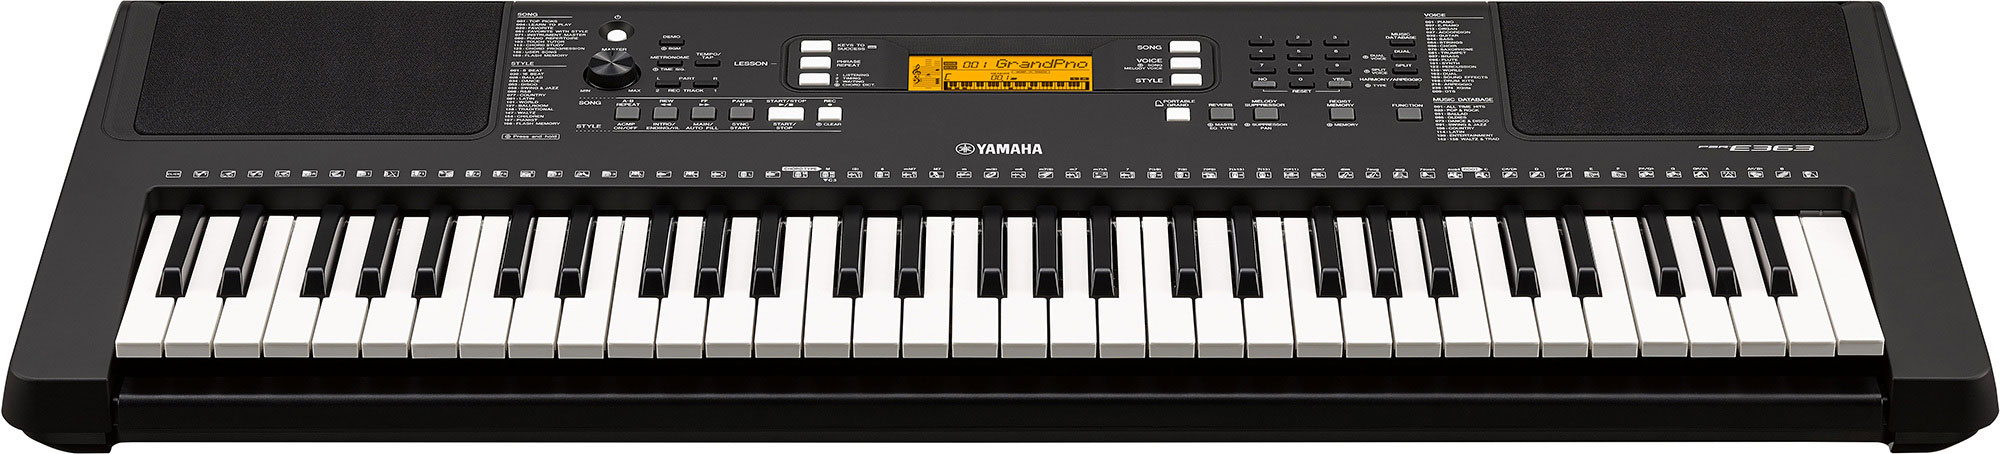 Yamaha Psr-e363 - - Clavier Arrangeur - Variation 1